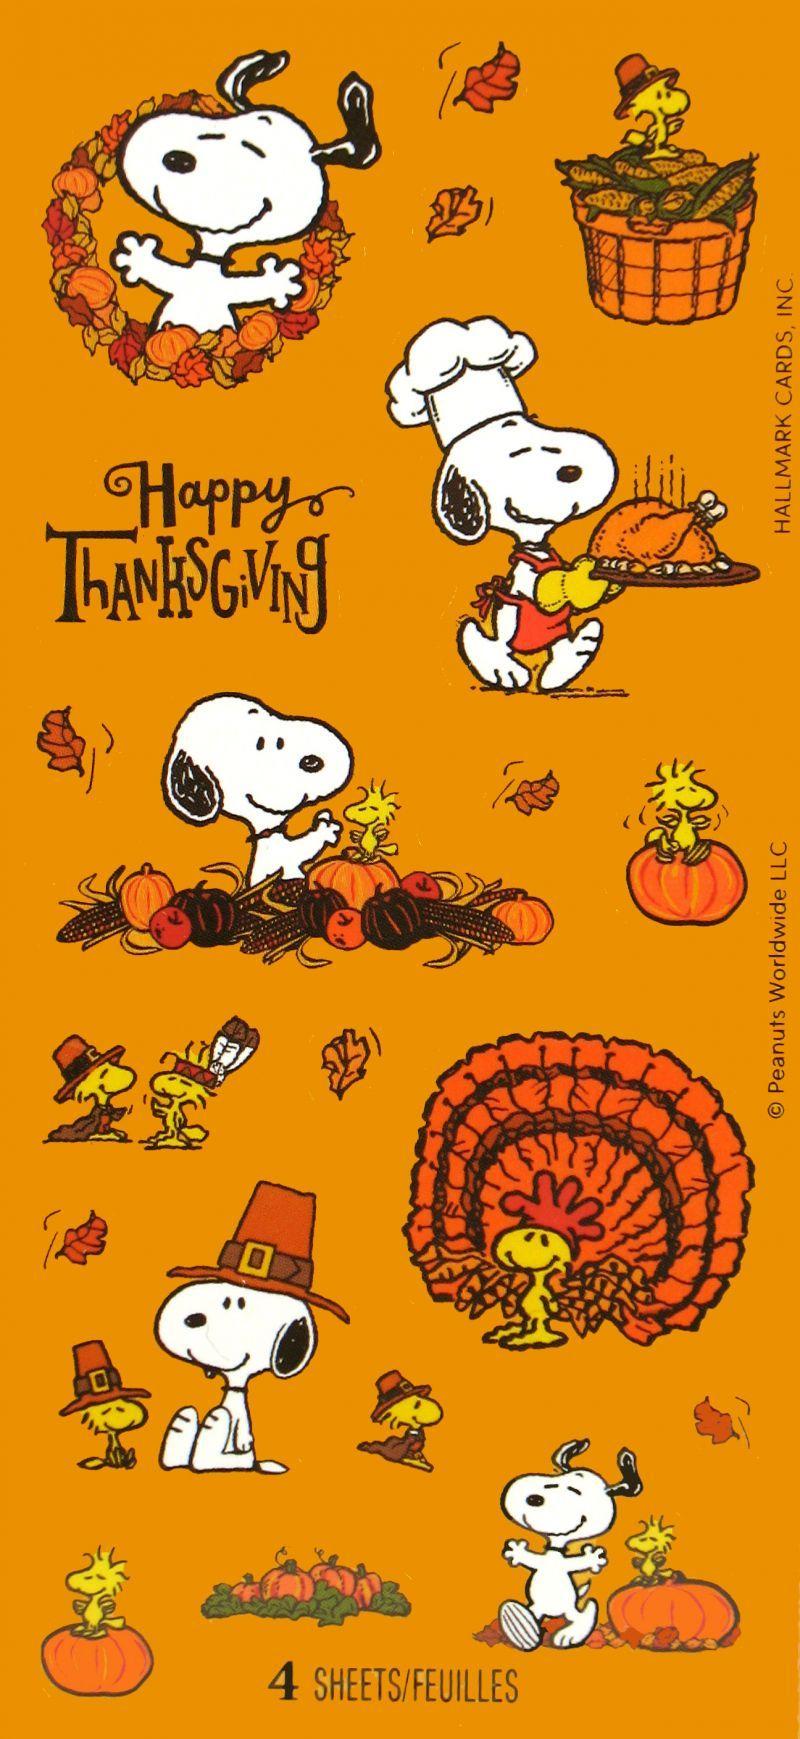 Thanksgiving. Snoopy wallpaper